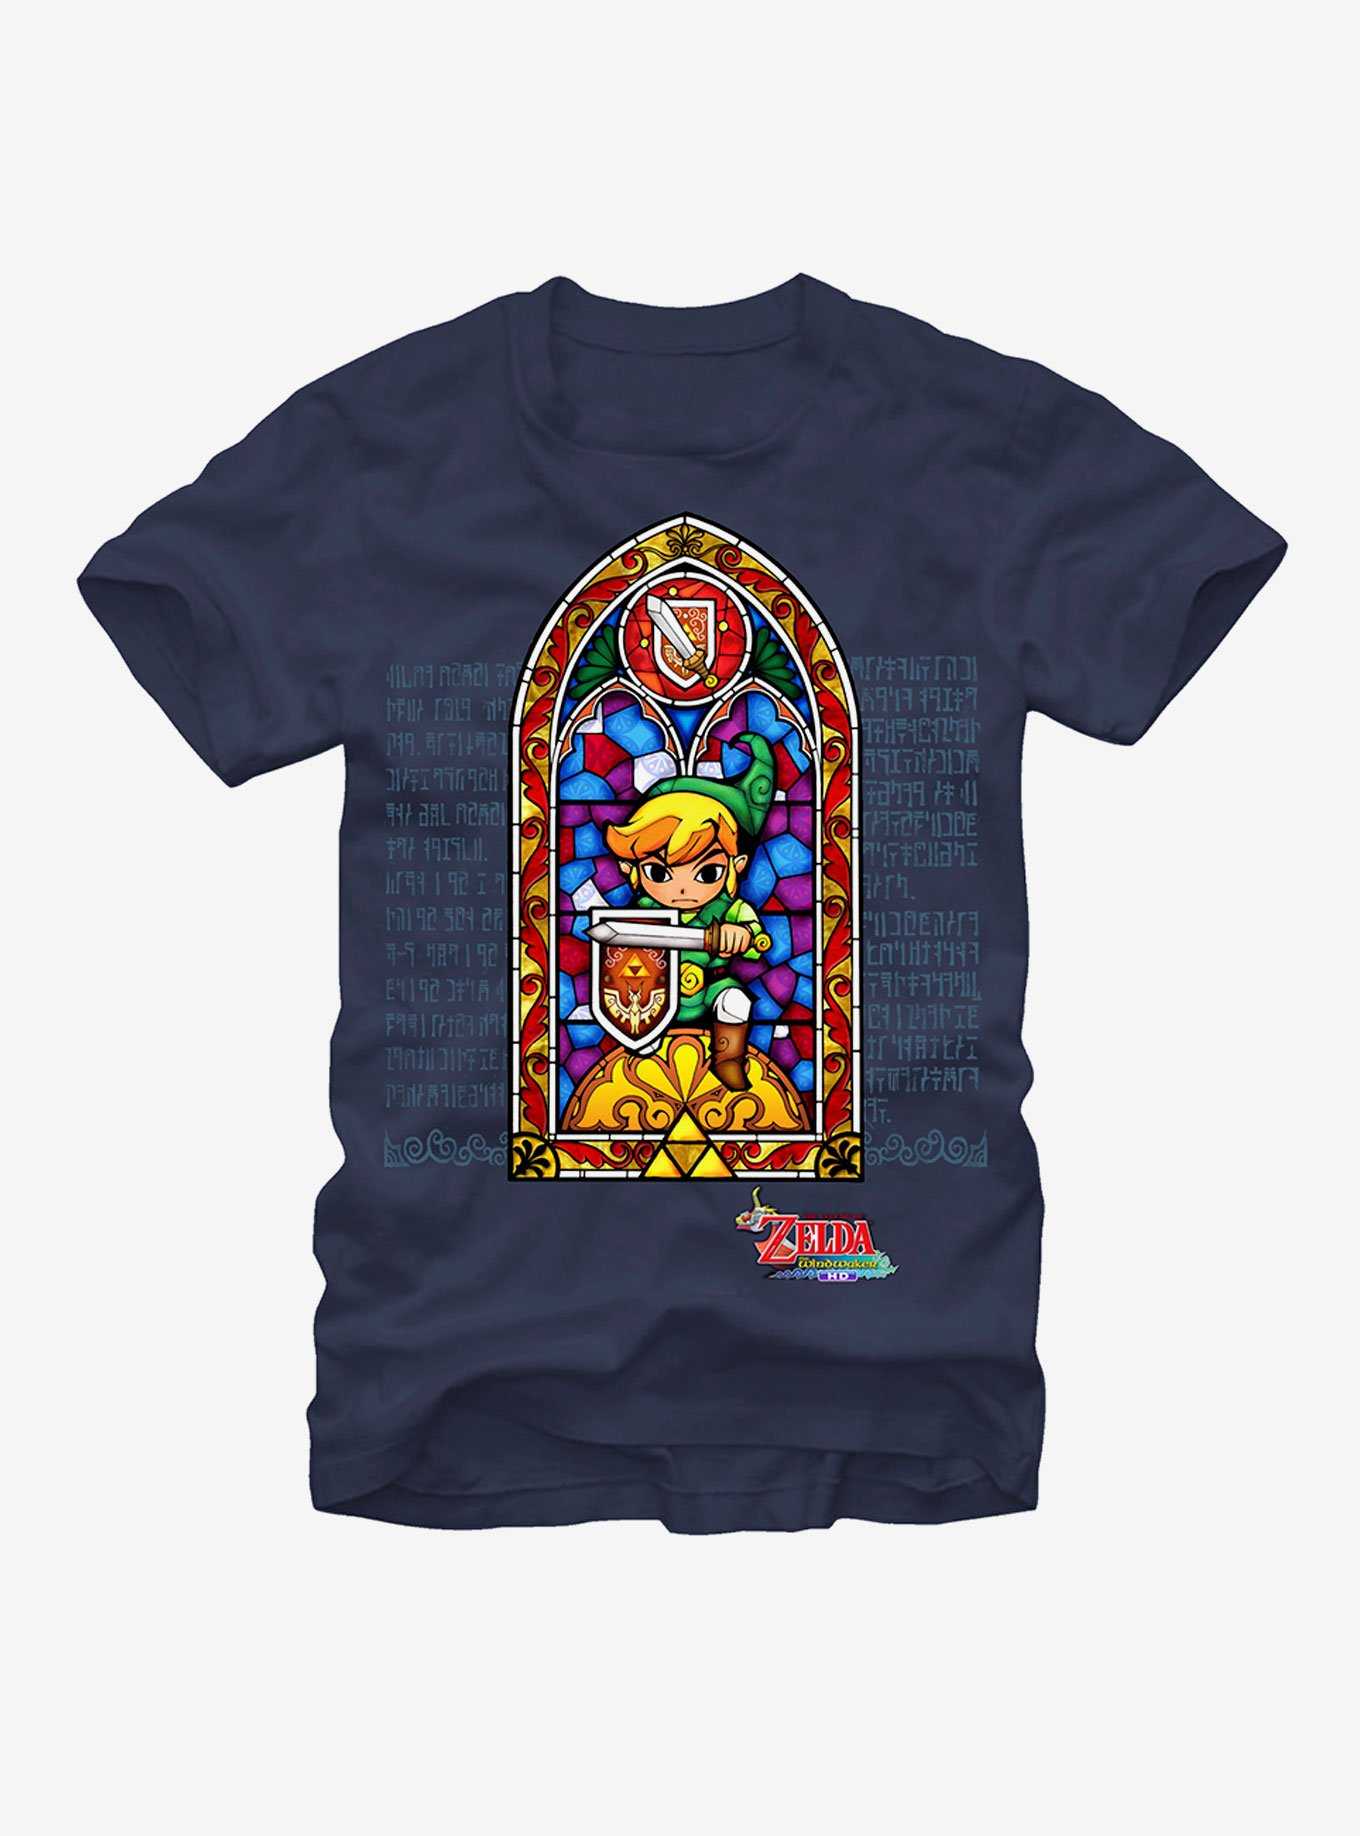 Nintendo Legend of Zelda Stained Glass T-Shirt, , hi-res